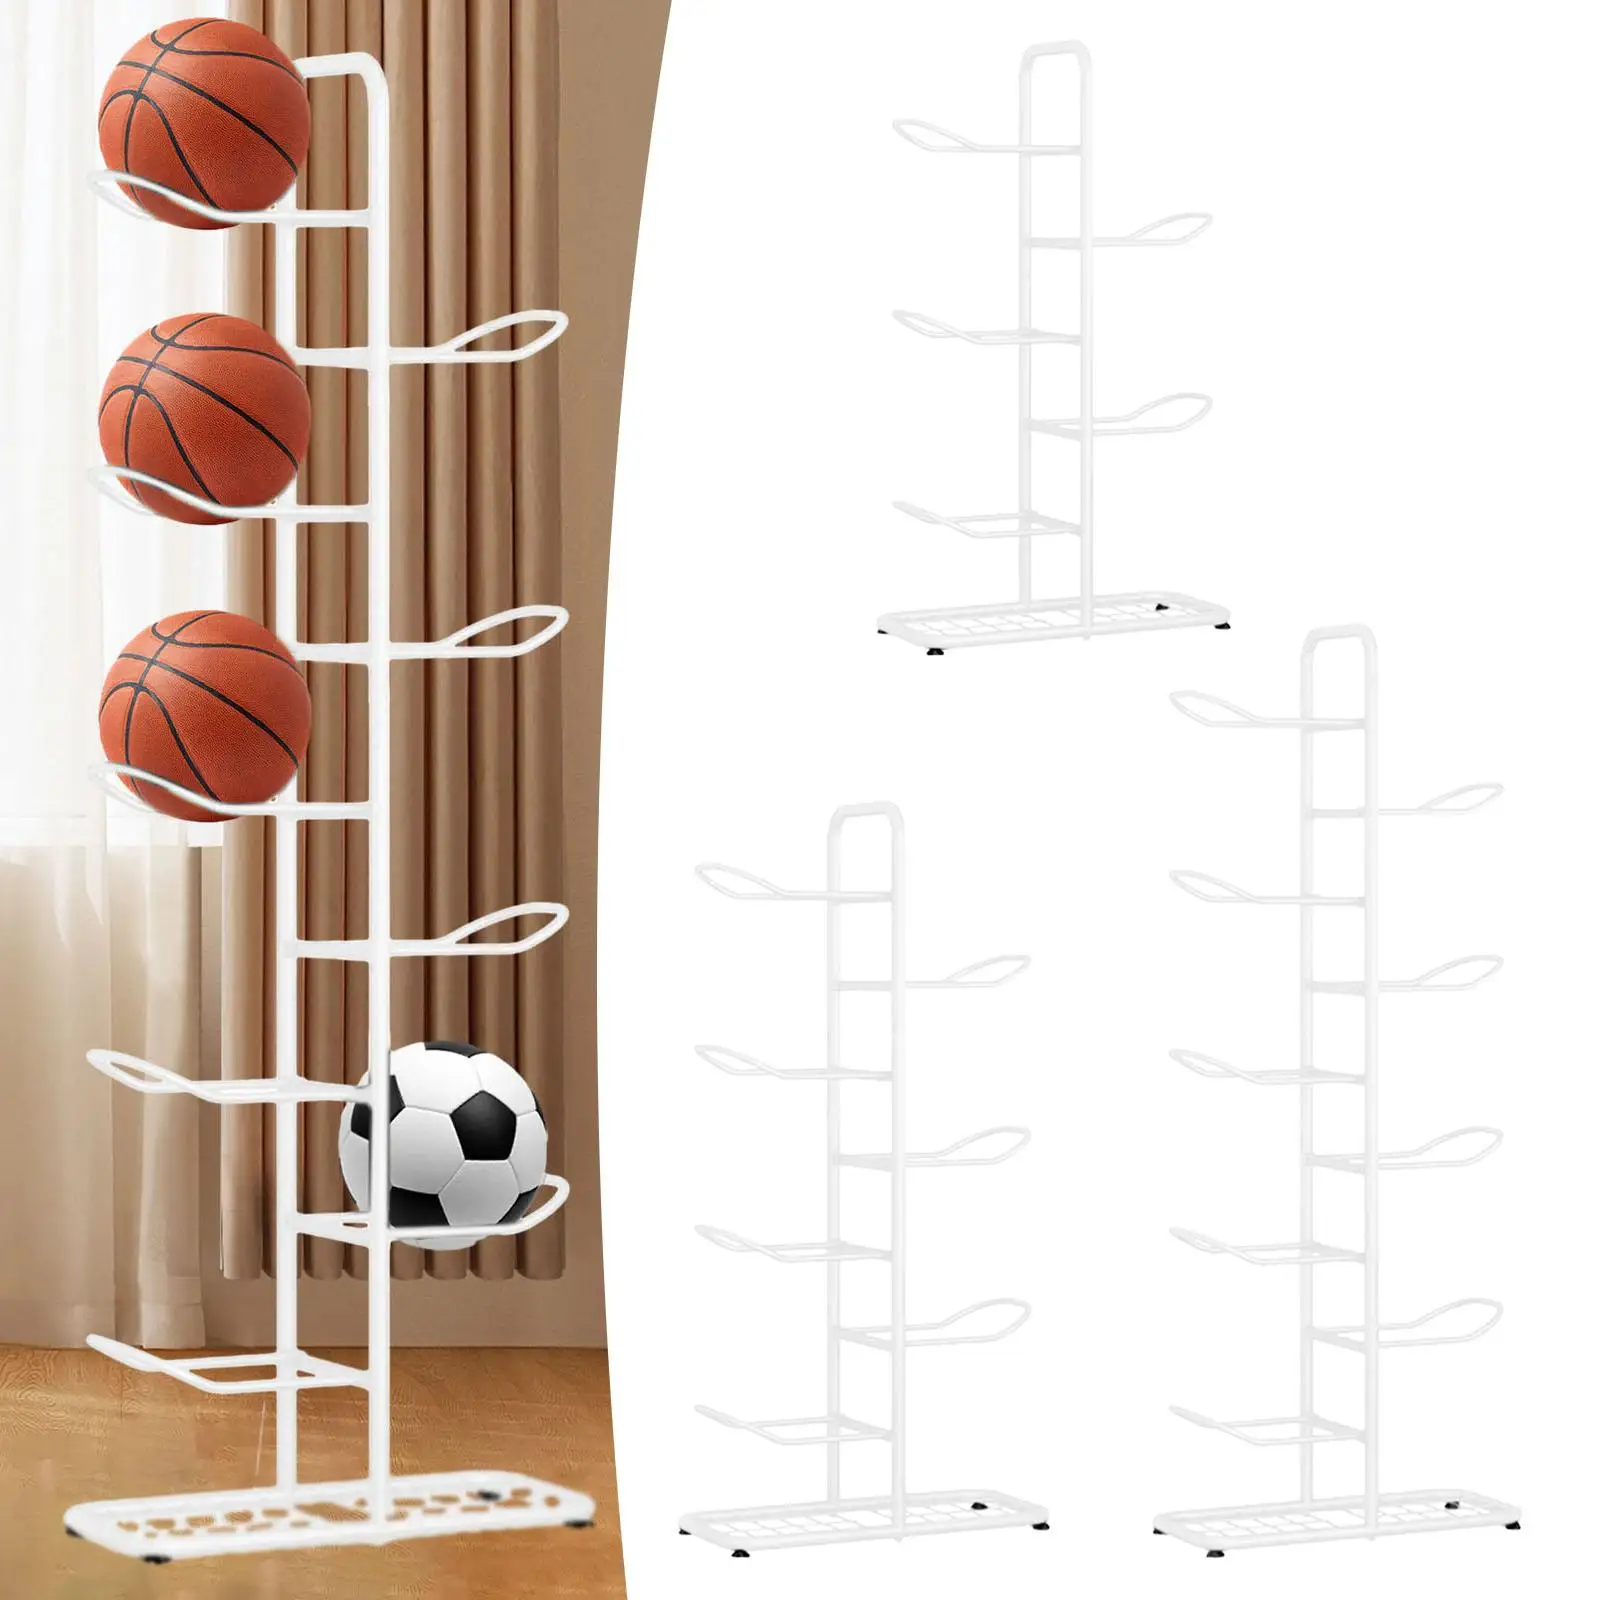 Ball Storage Holder Sports Equipment Storage Organizer Iron Display Stand Holder Multi Layers Ball Rack for Rackets Baseball